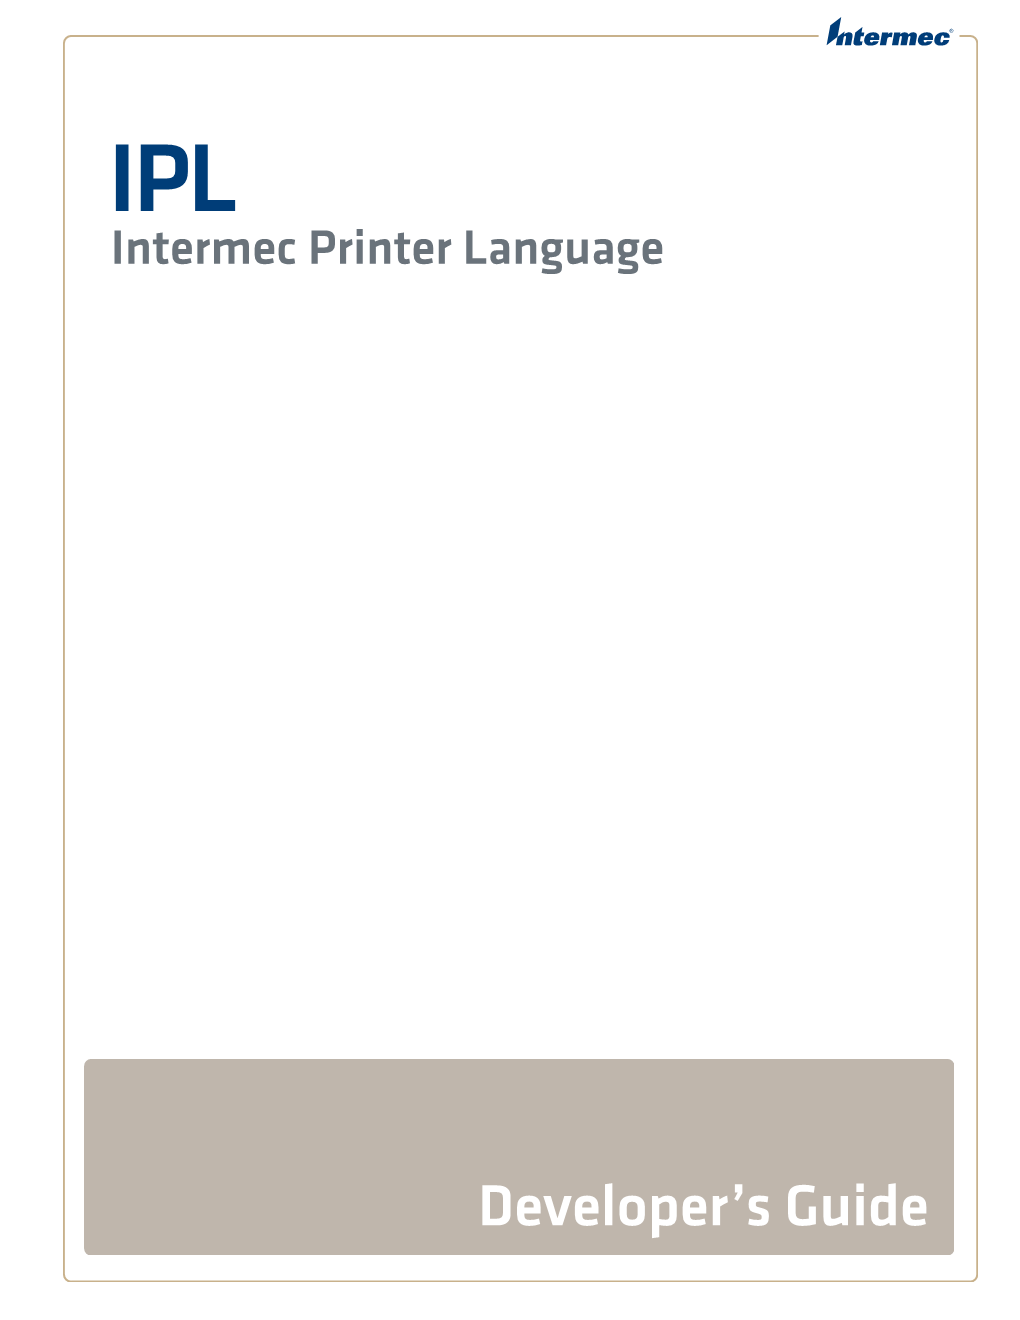 Intermec Printer Language (IPL) Developer's Guide